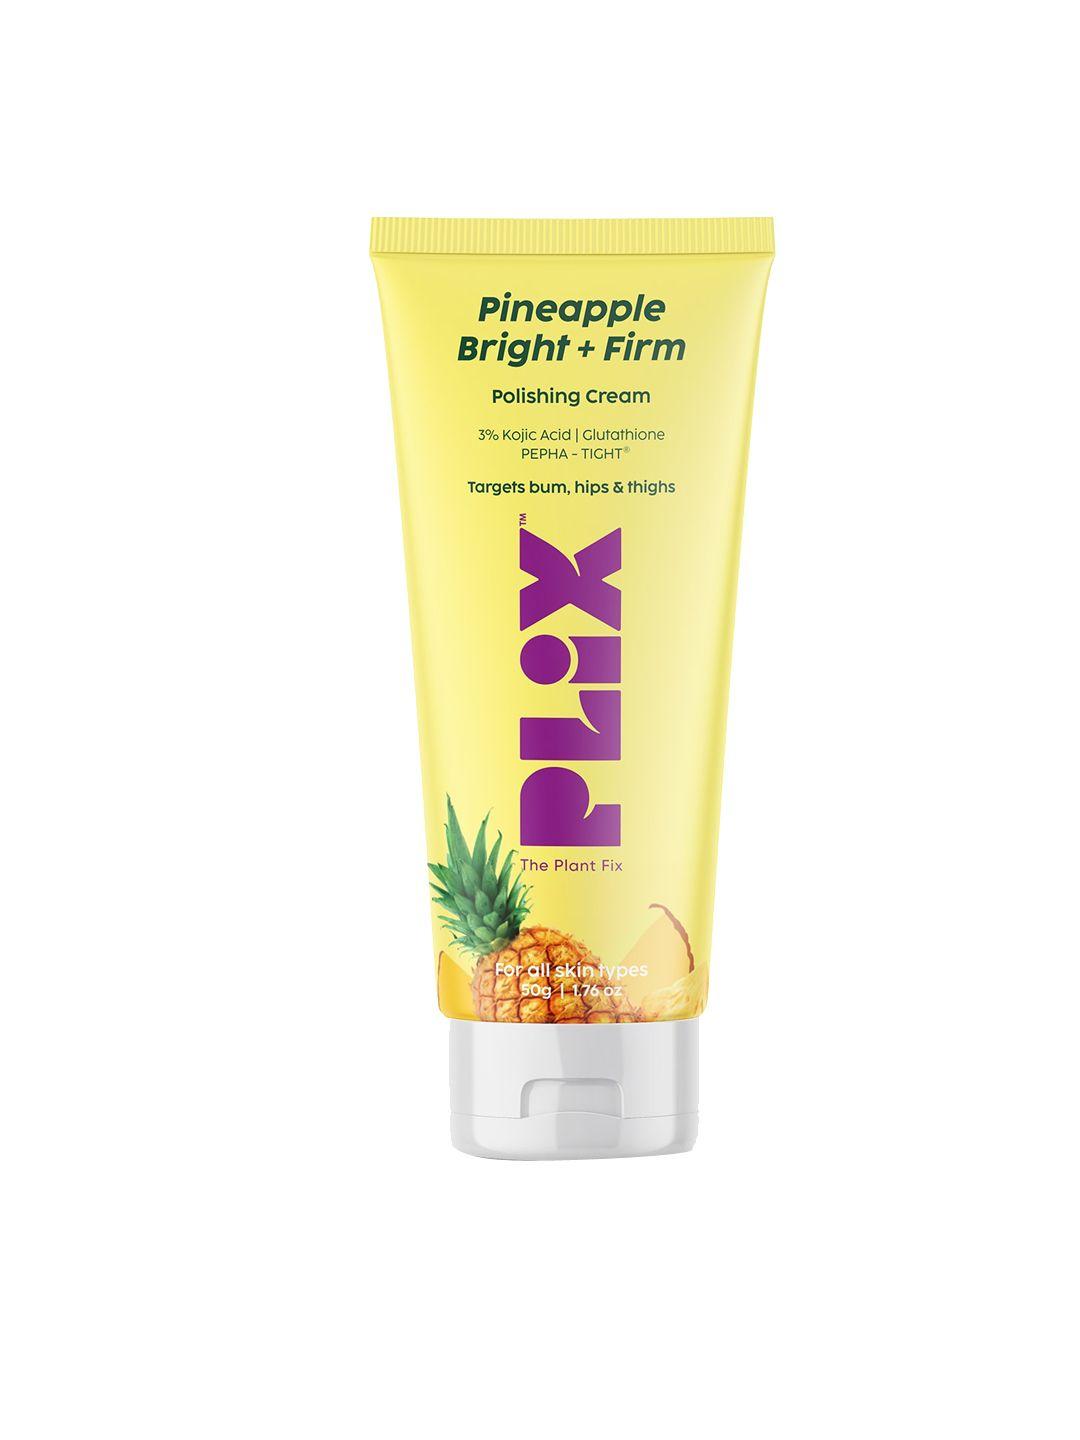 plix the plant fix plix pineapple 3% kojic acid cream - 50g